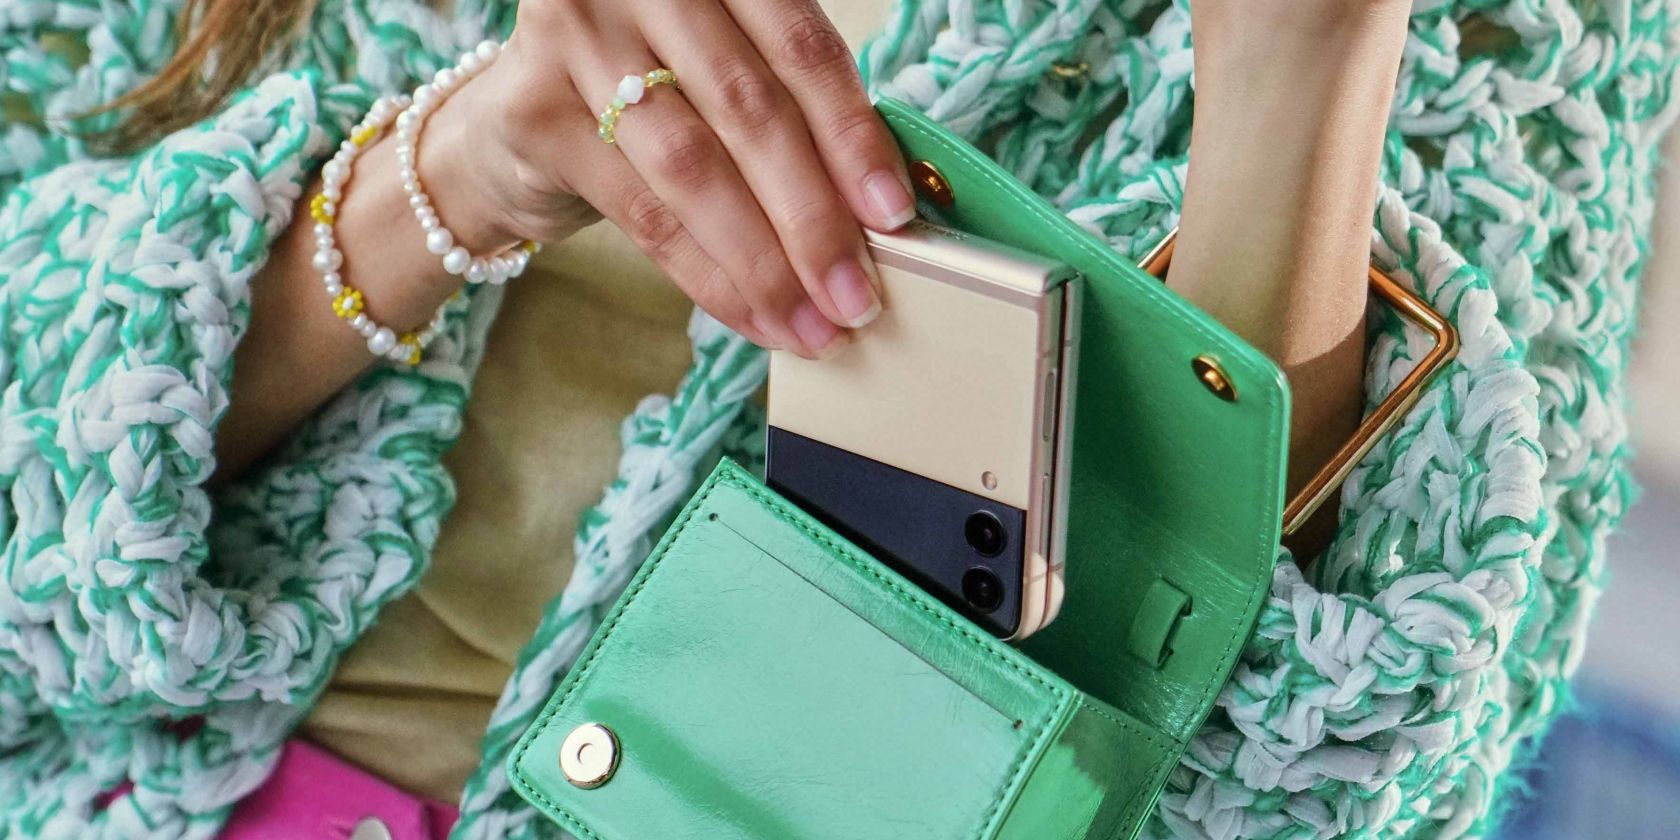 Galaxy Z Flip 3 inside a purse